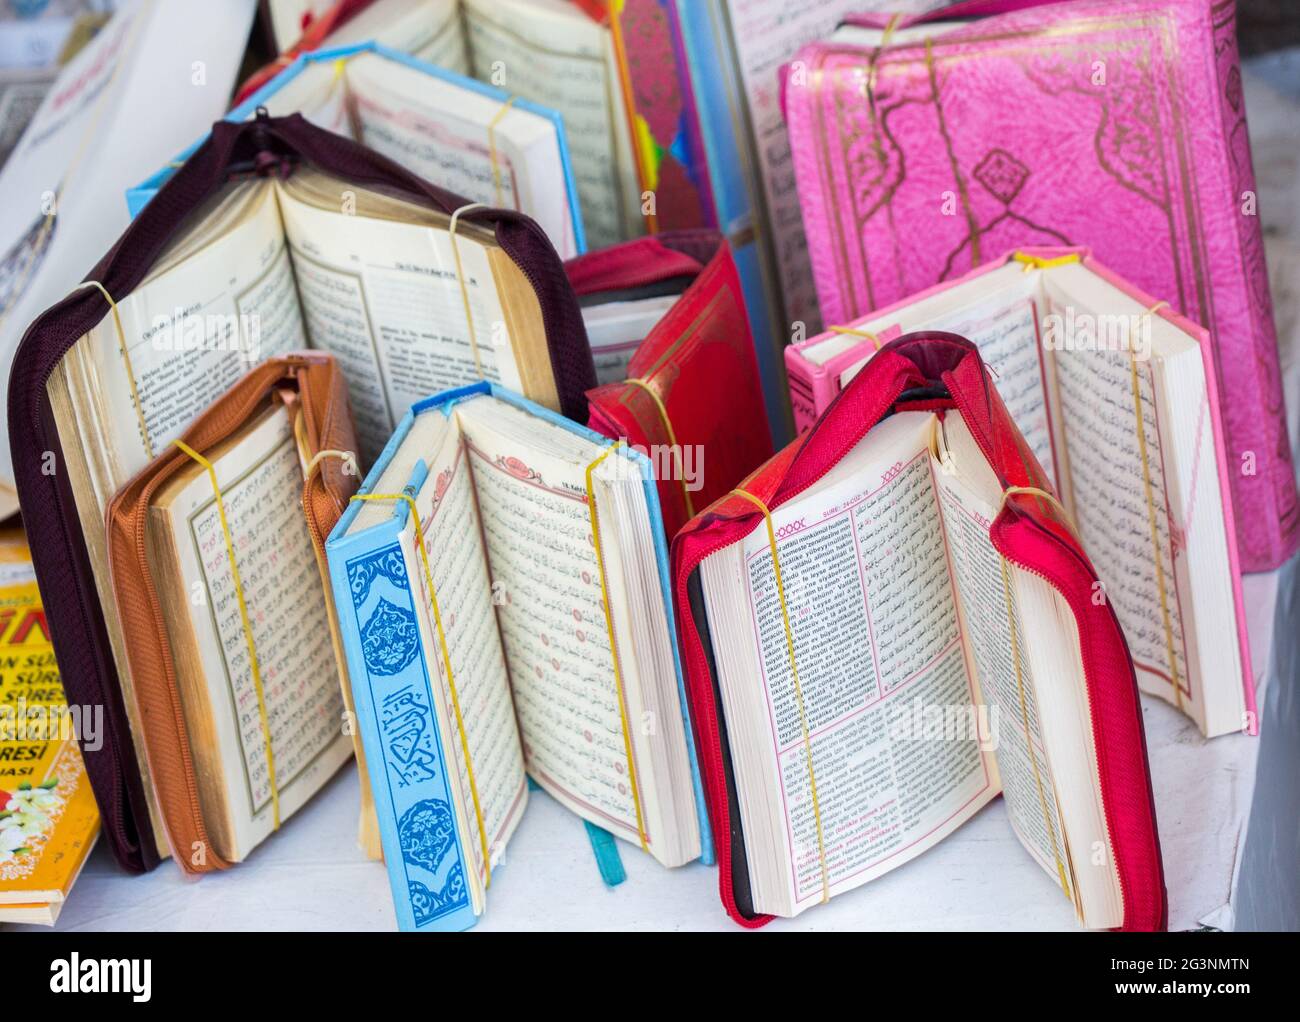 Islamic Holy Book Quran Stock Photo